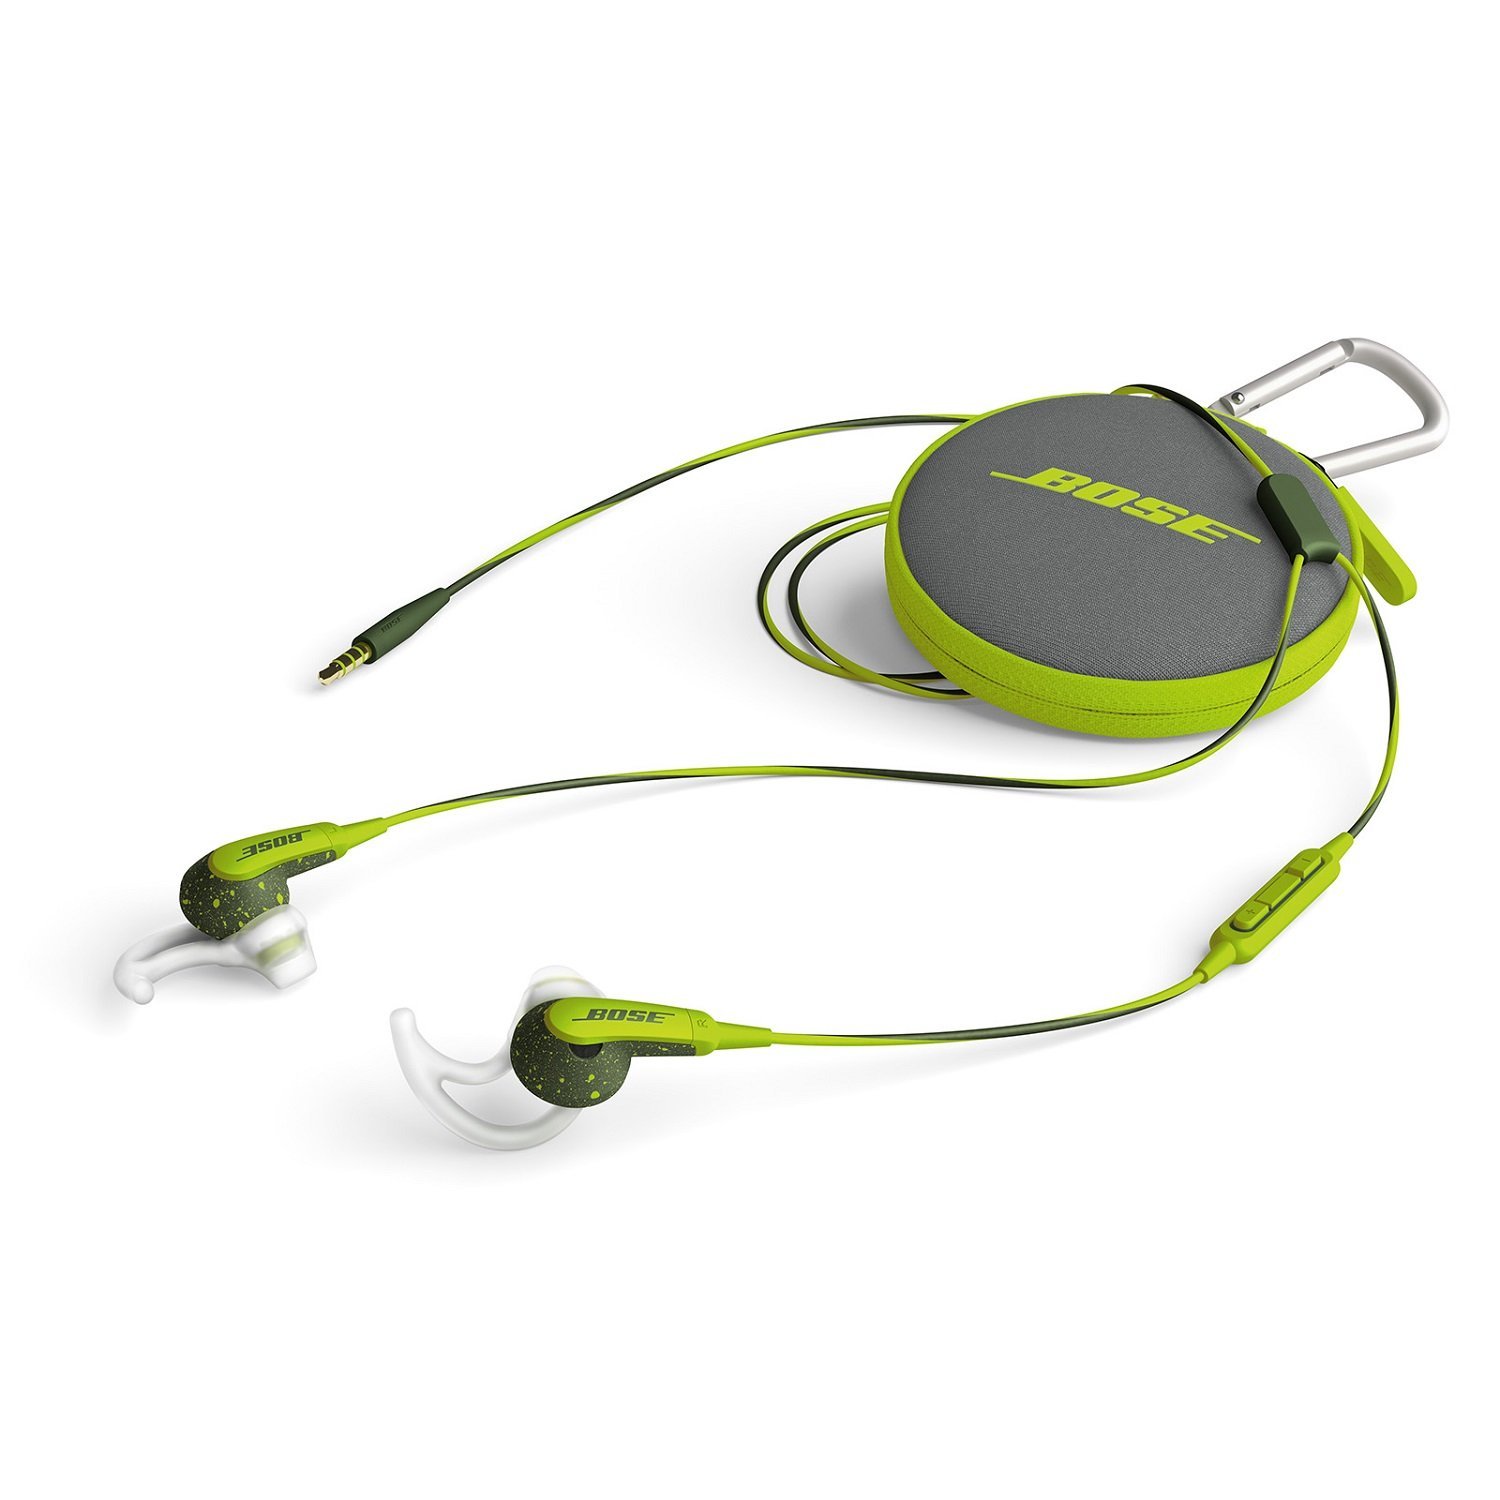 Bose SoundSport in-ear headphones - Apple devices, Energy Green $39.00